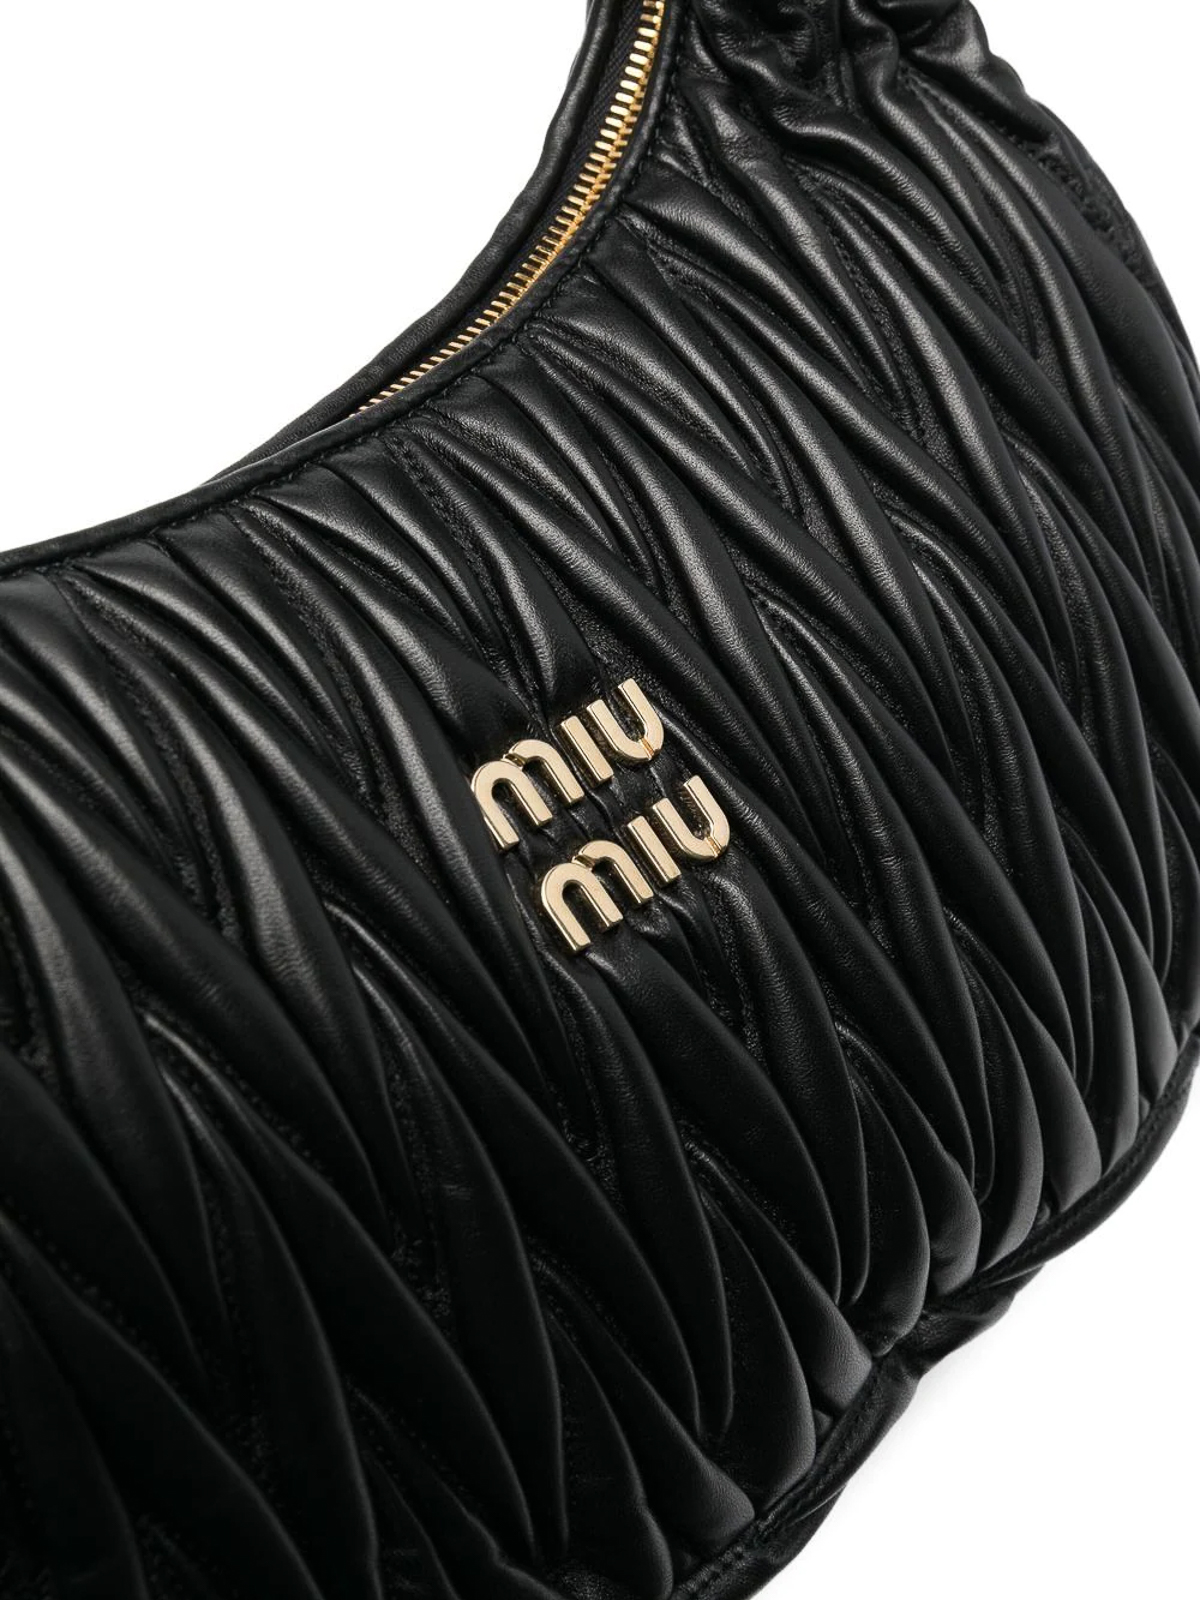 Miu Wander Leather Shoulder Bag in Black - Miu Miu